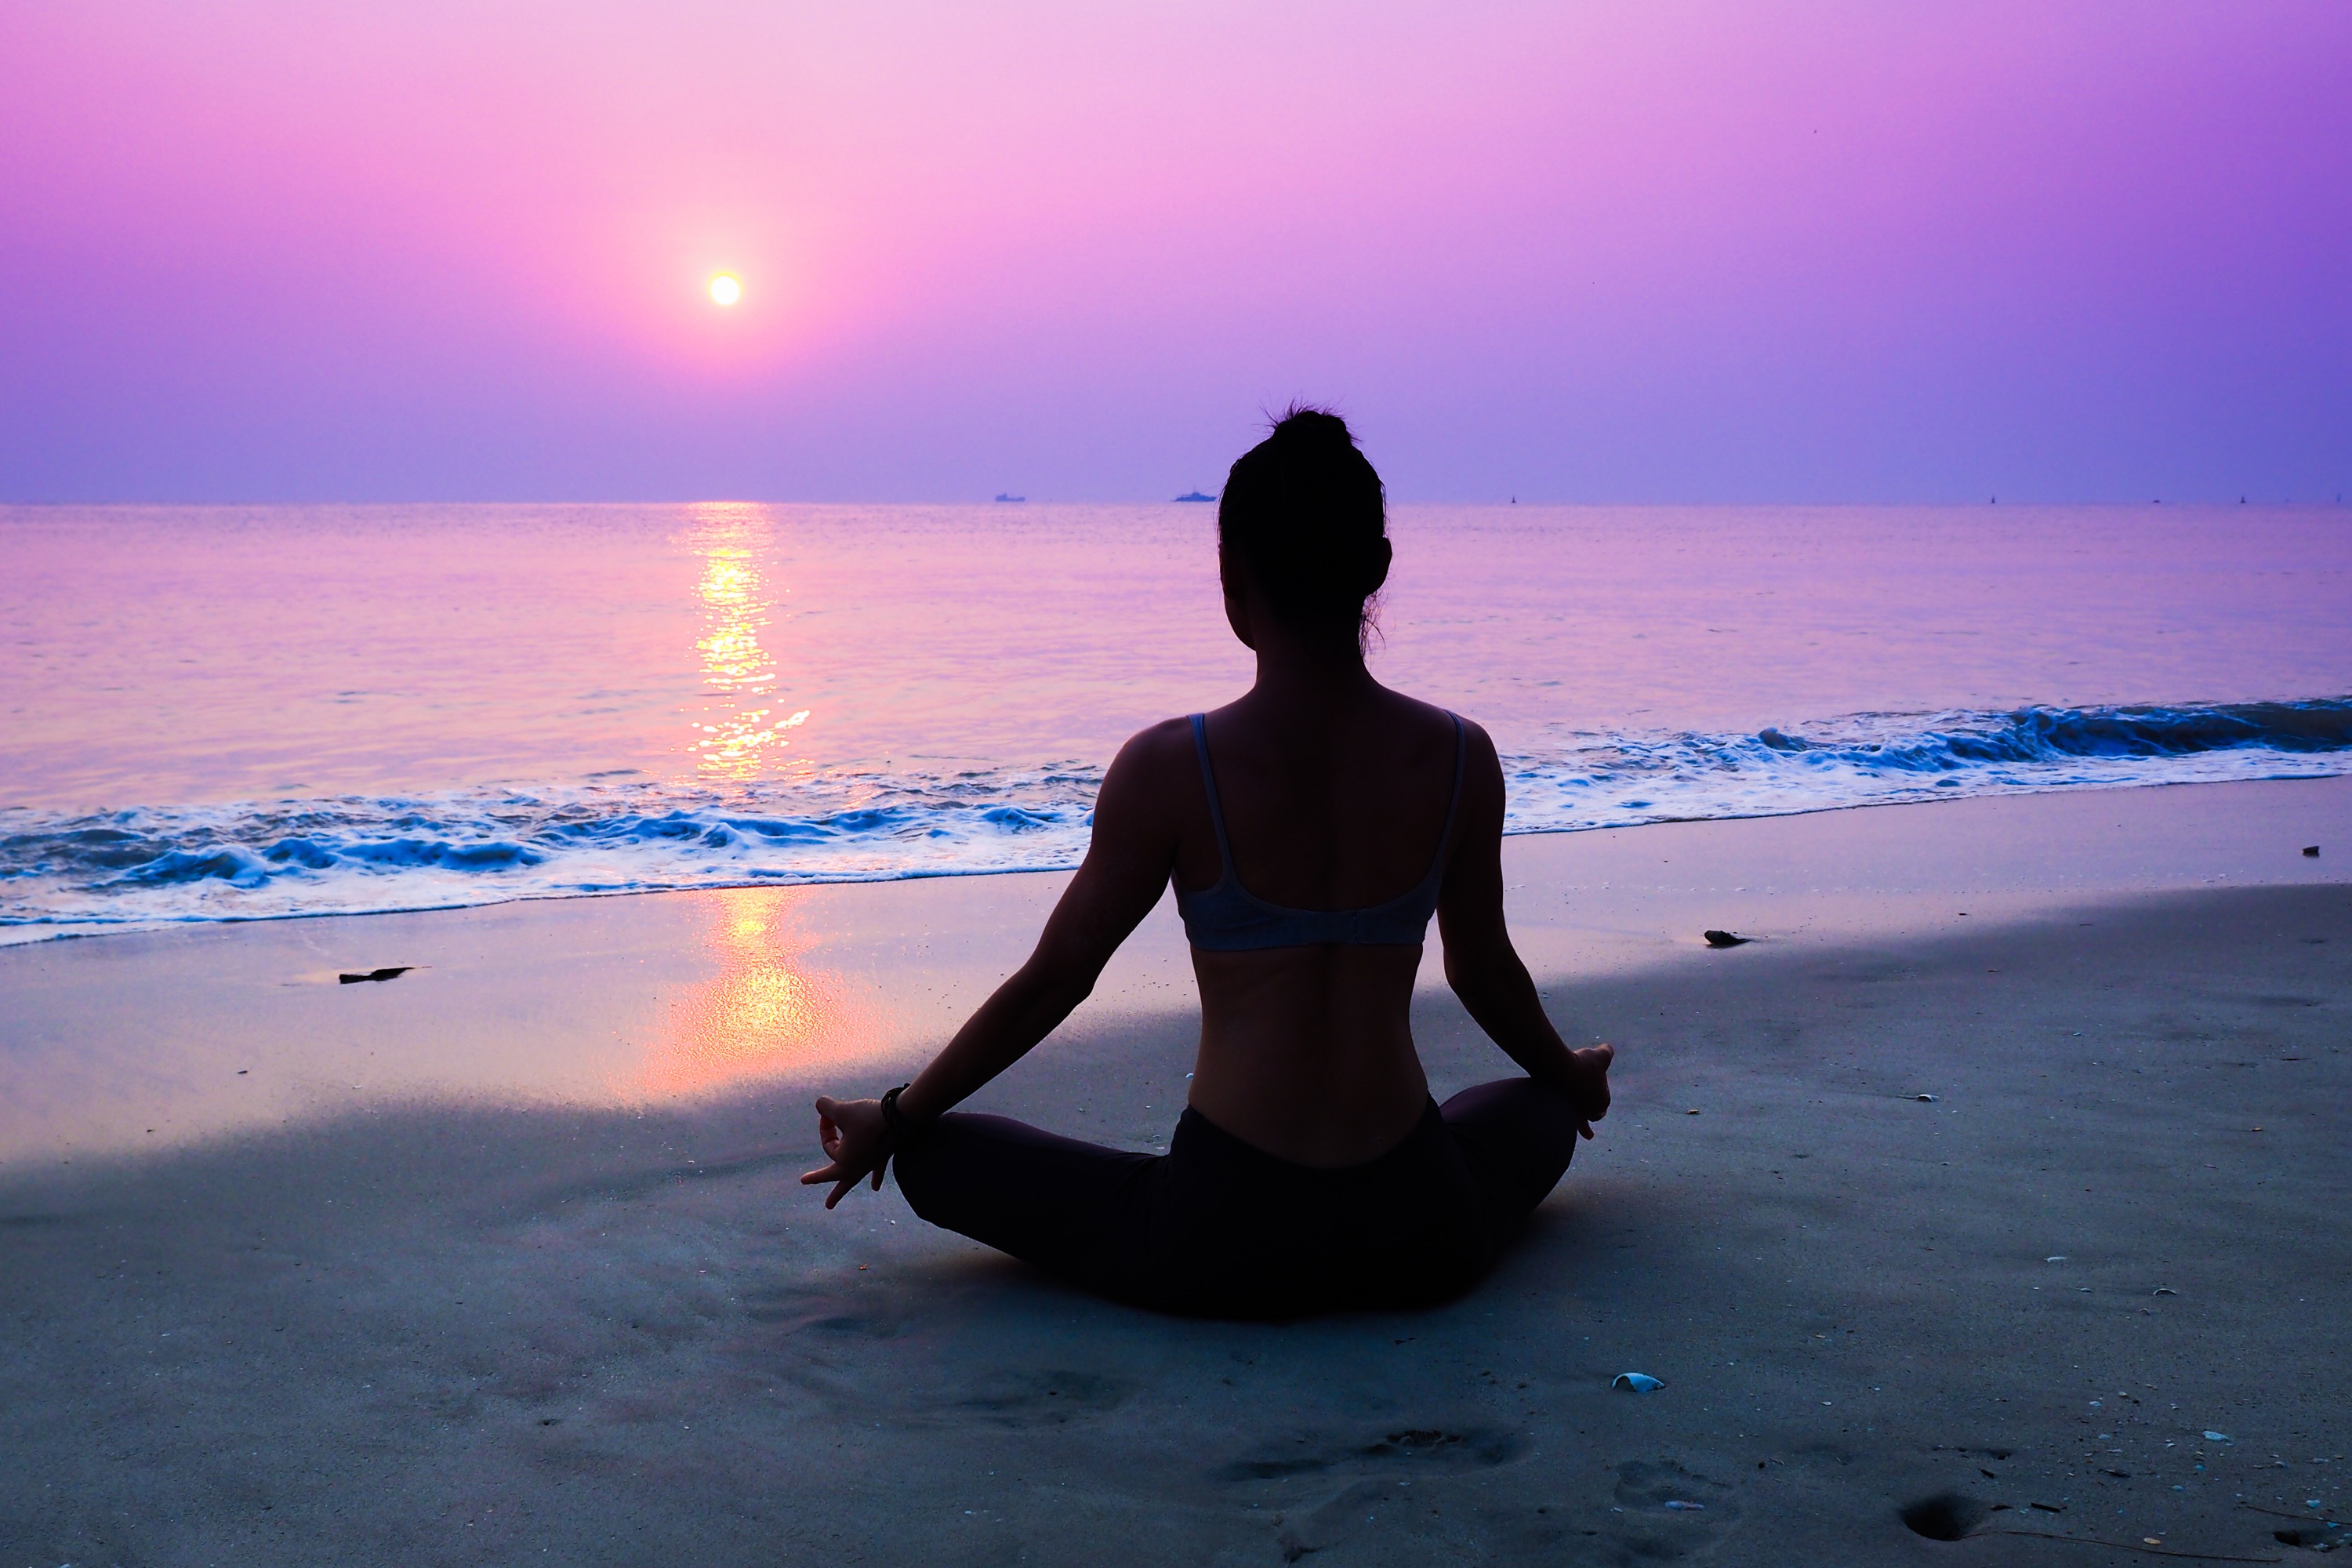 Релакс для девушки. Медитация на берегу моря. Девушка медитирует на берегу. Расслабление. Йога у океана.